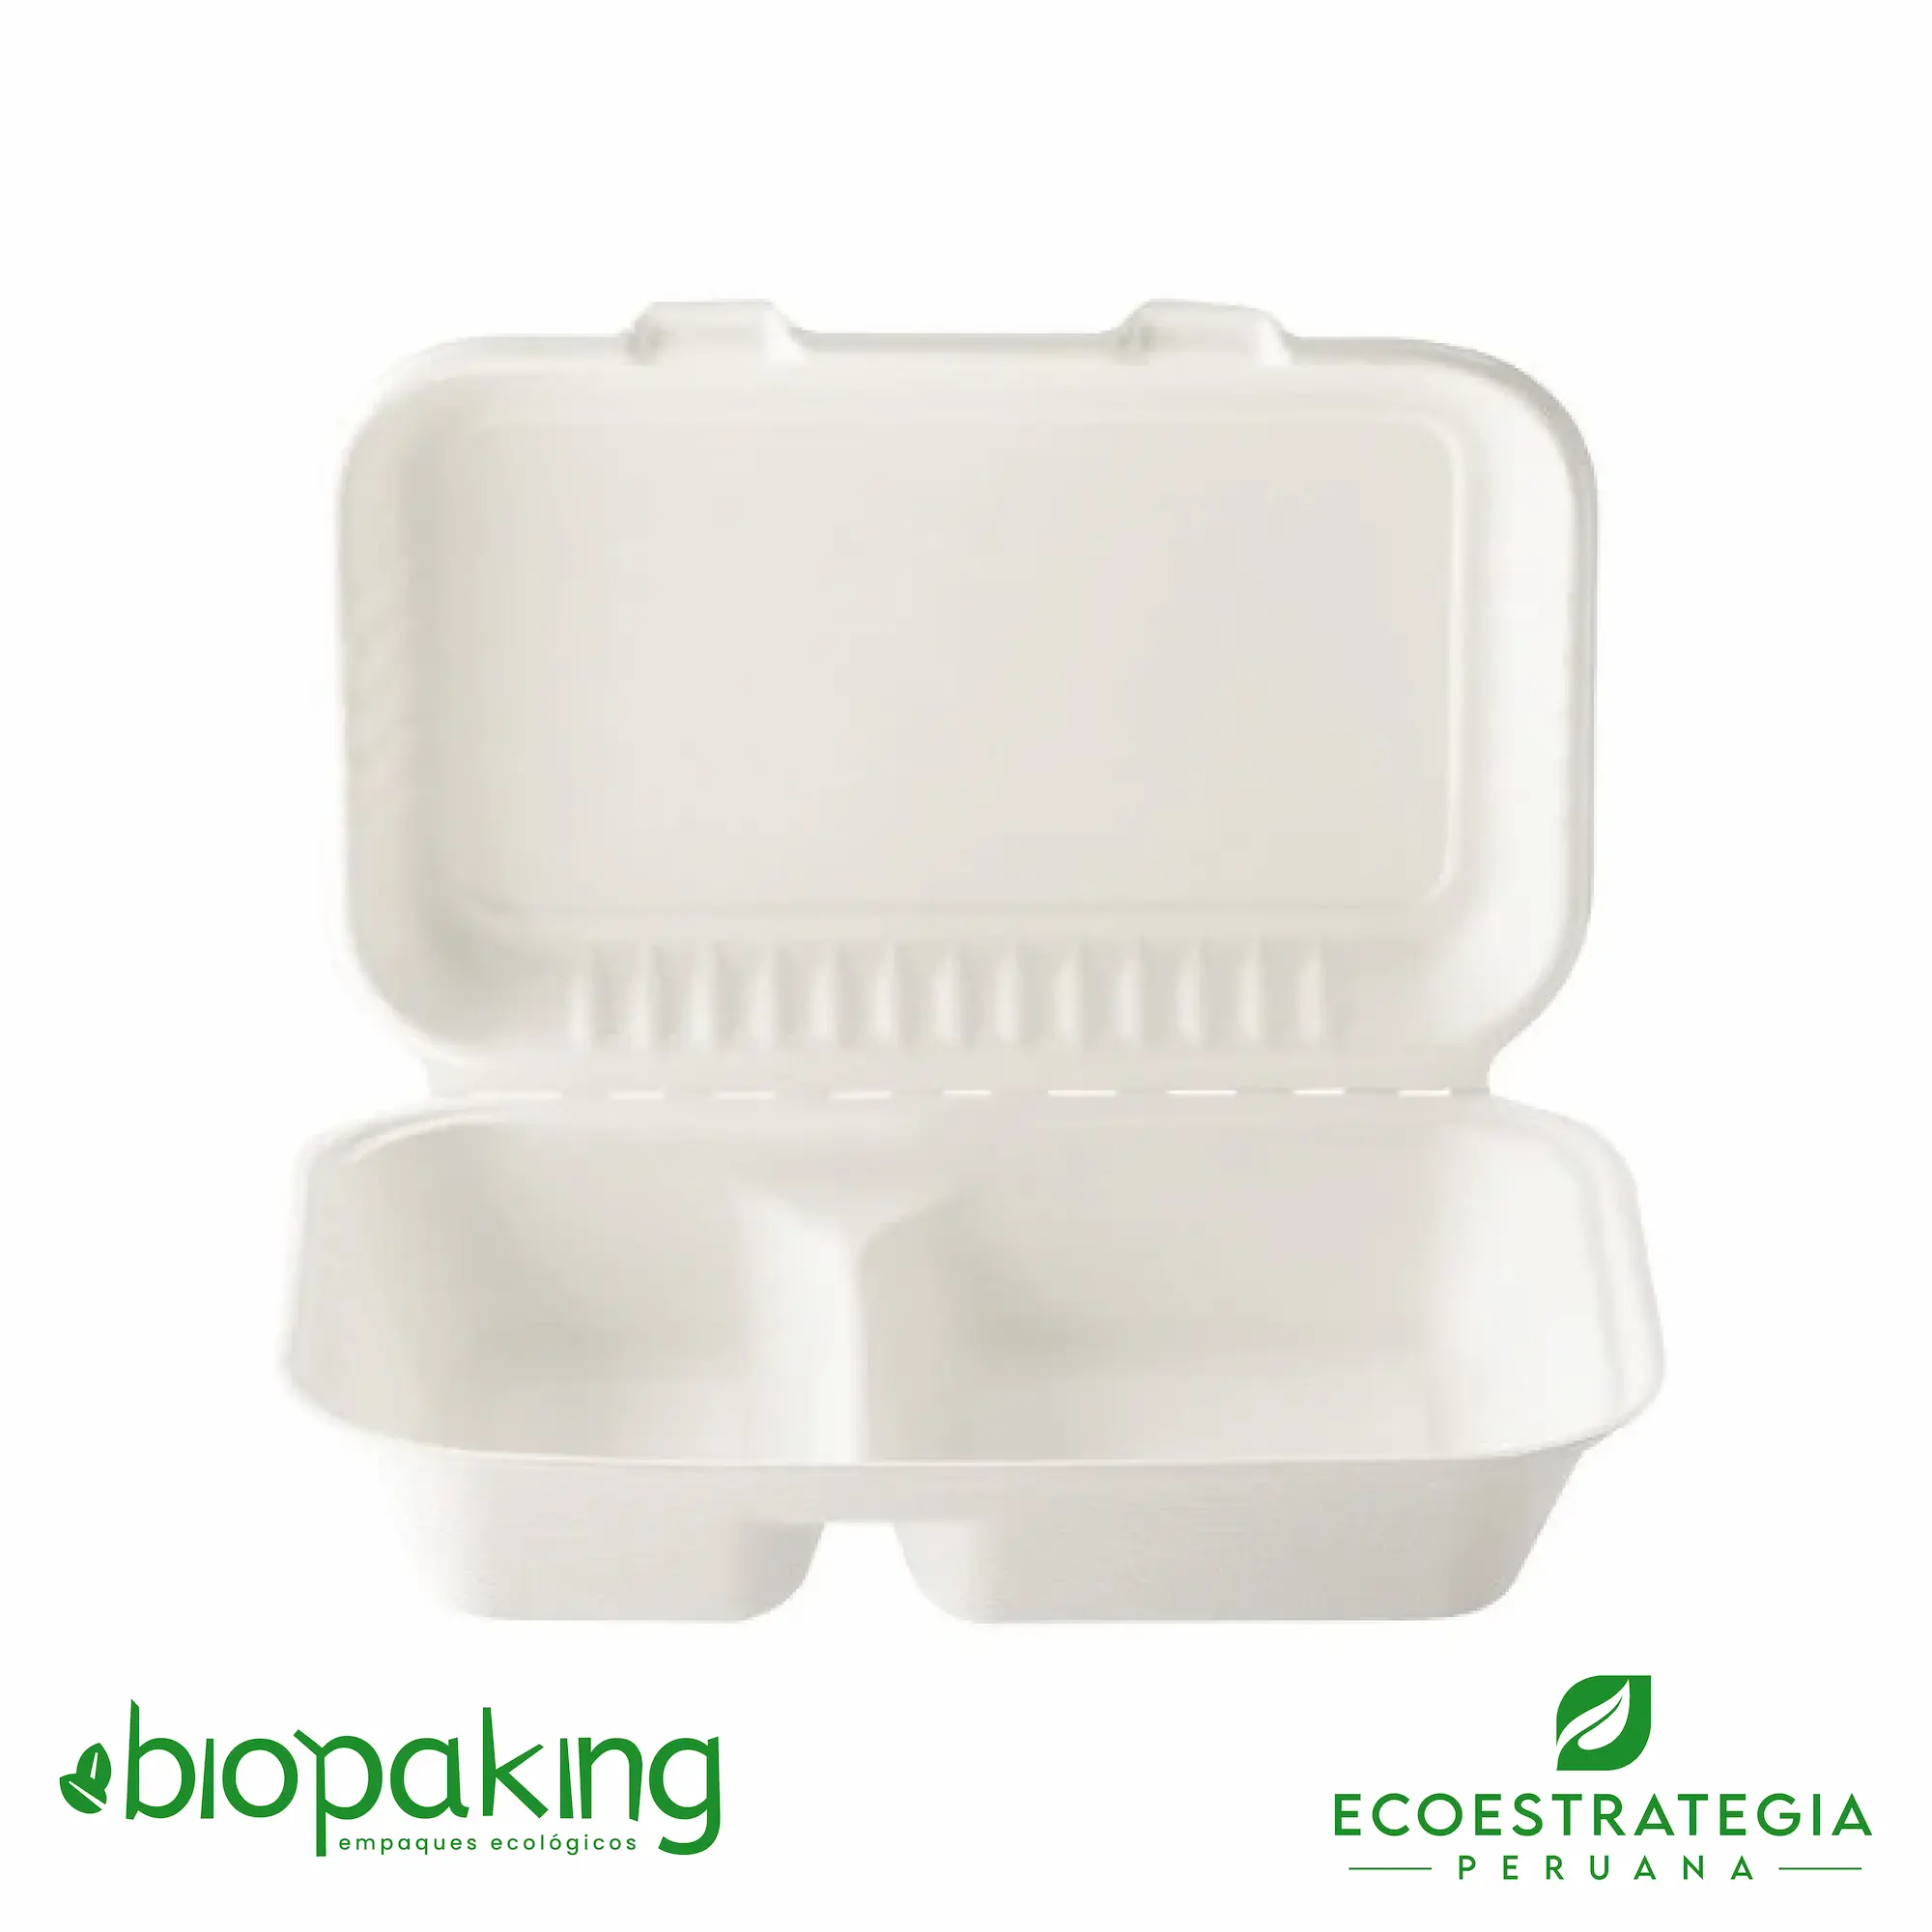 Eco Estrategia Peruana: Envases biodegradables CT1